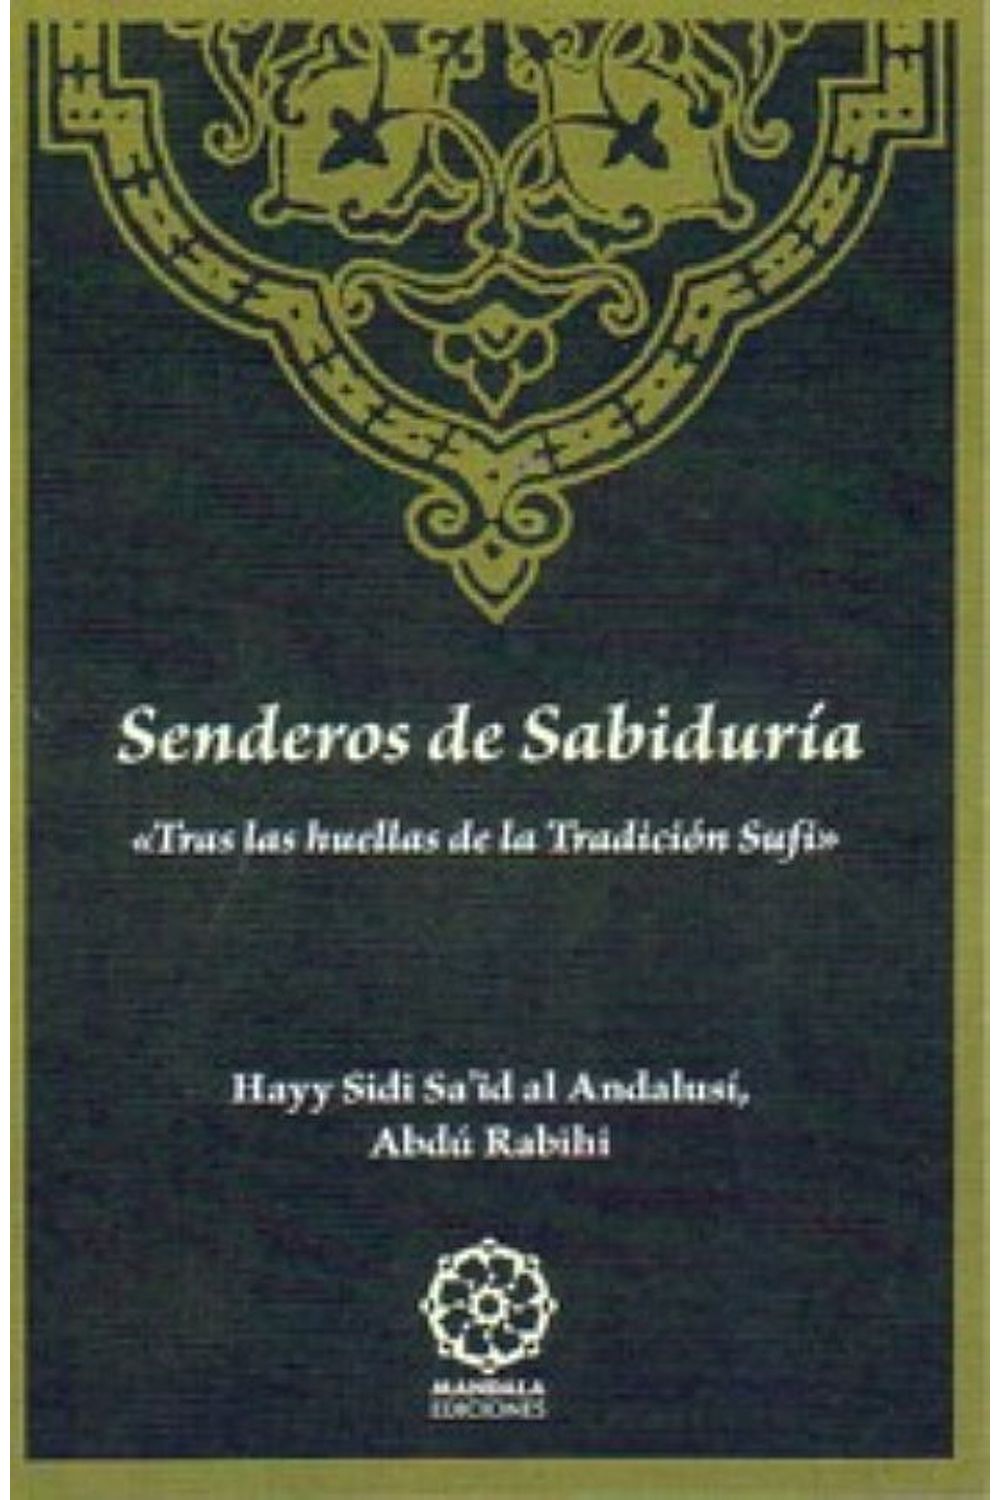 bm-senderos-de-sabiduria-ediciones-literarias-mandala-9788483521632